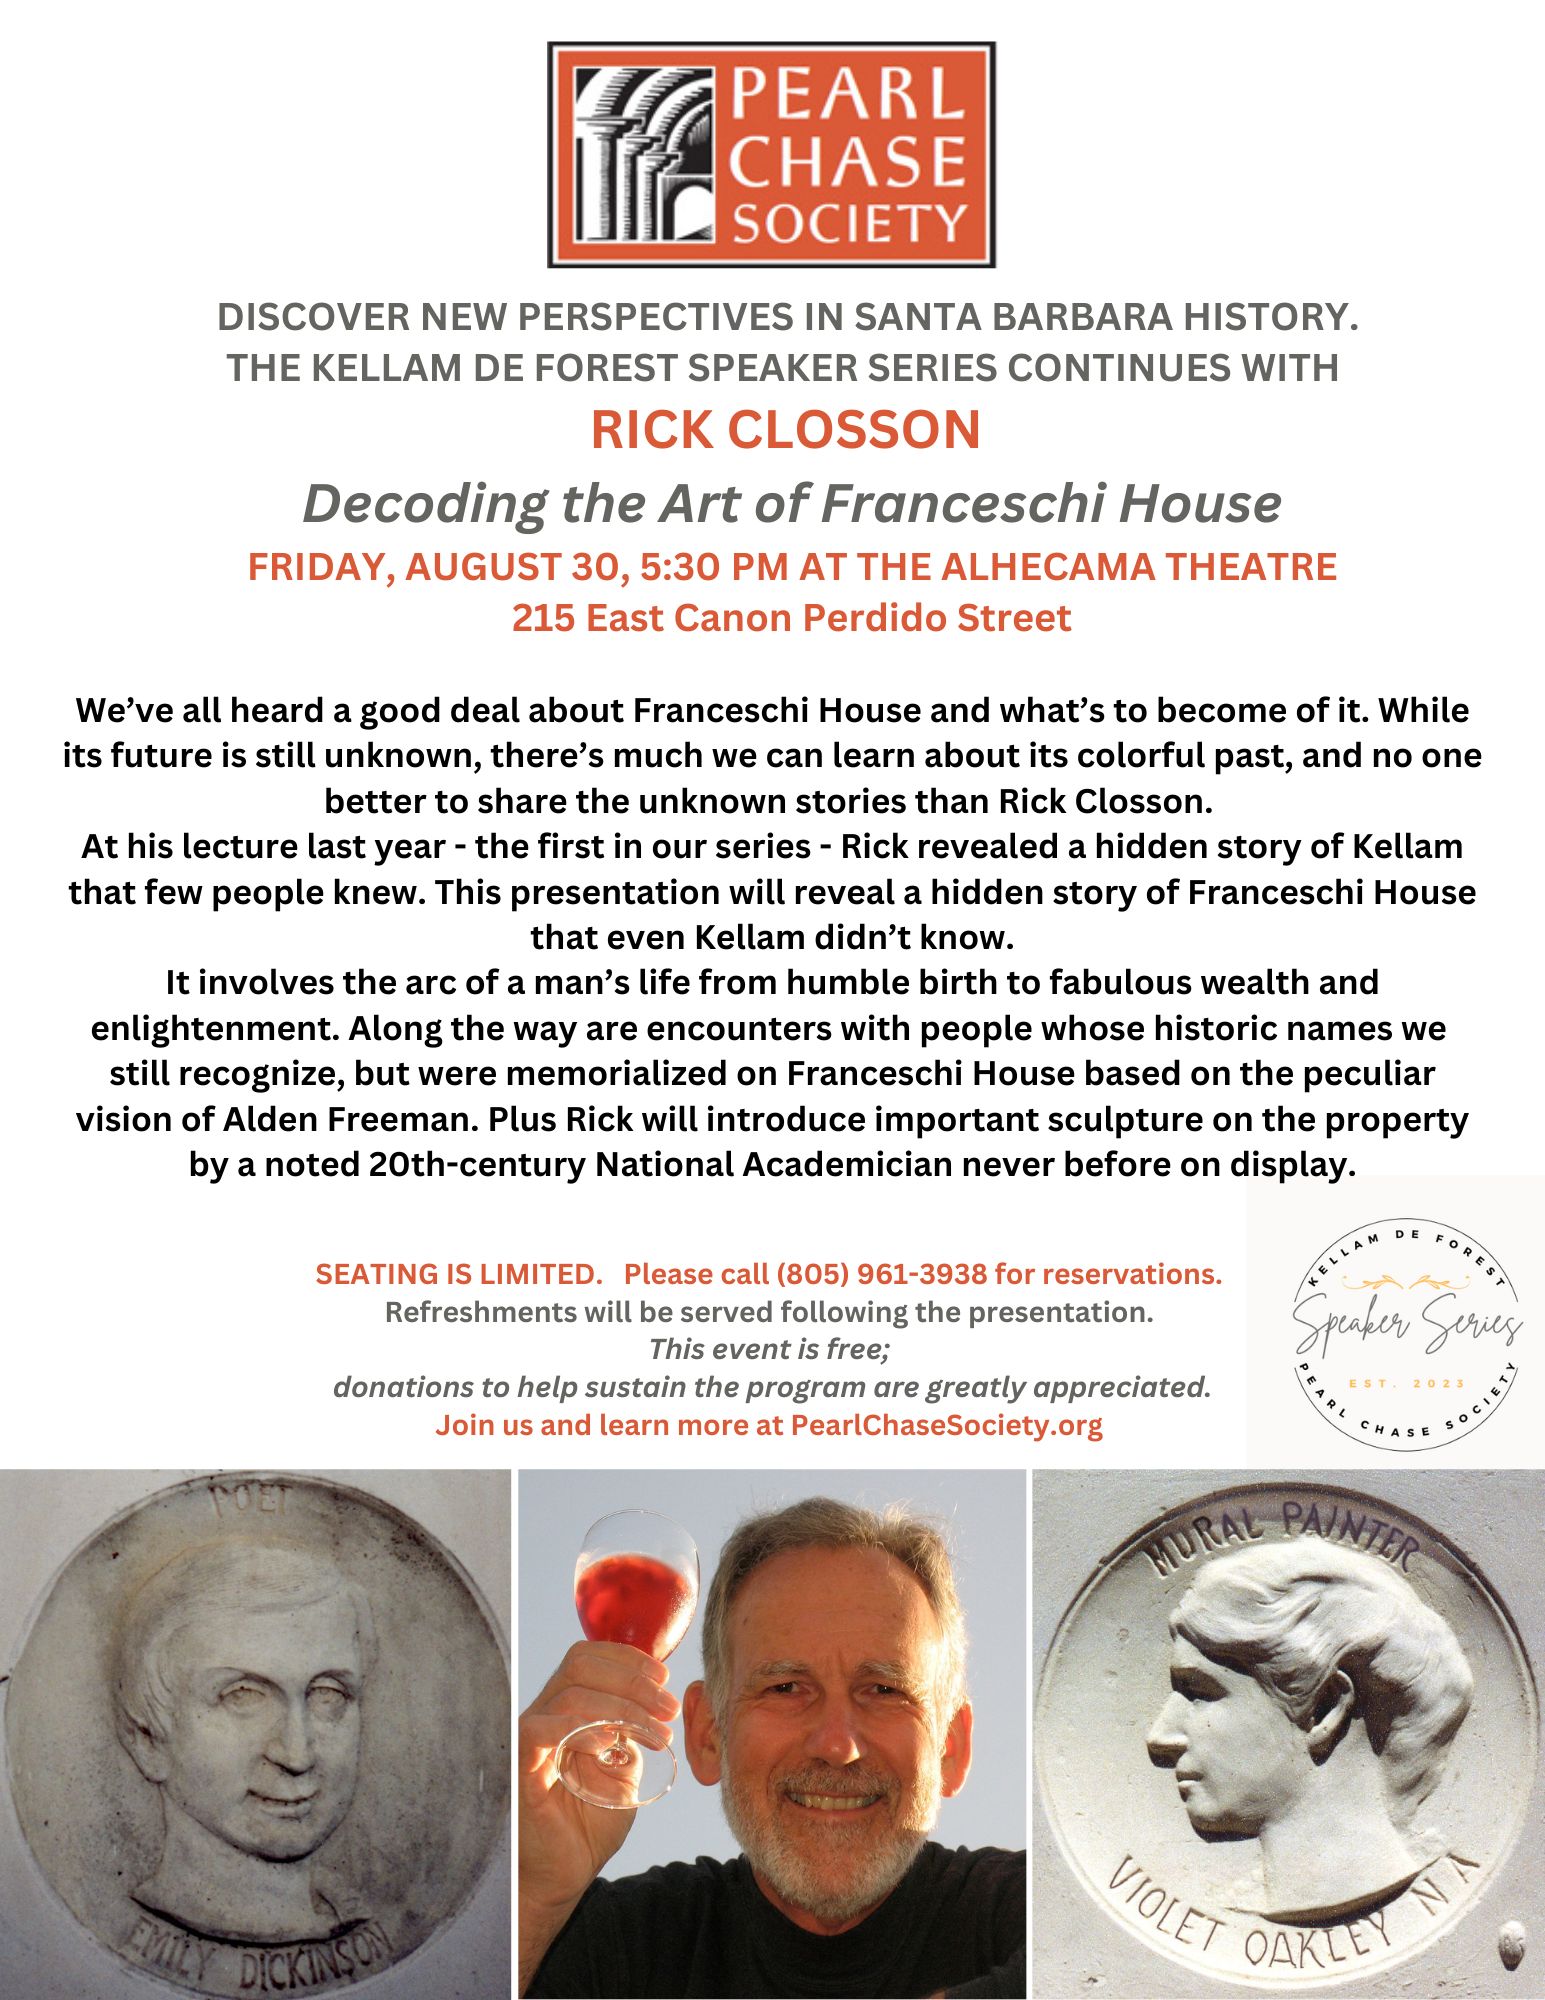 Kellam de Forest Speaker Series: Decoding the Art of Franceschi House